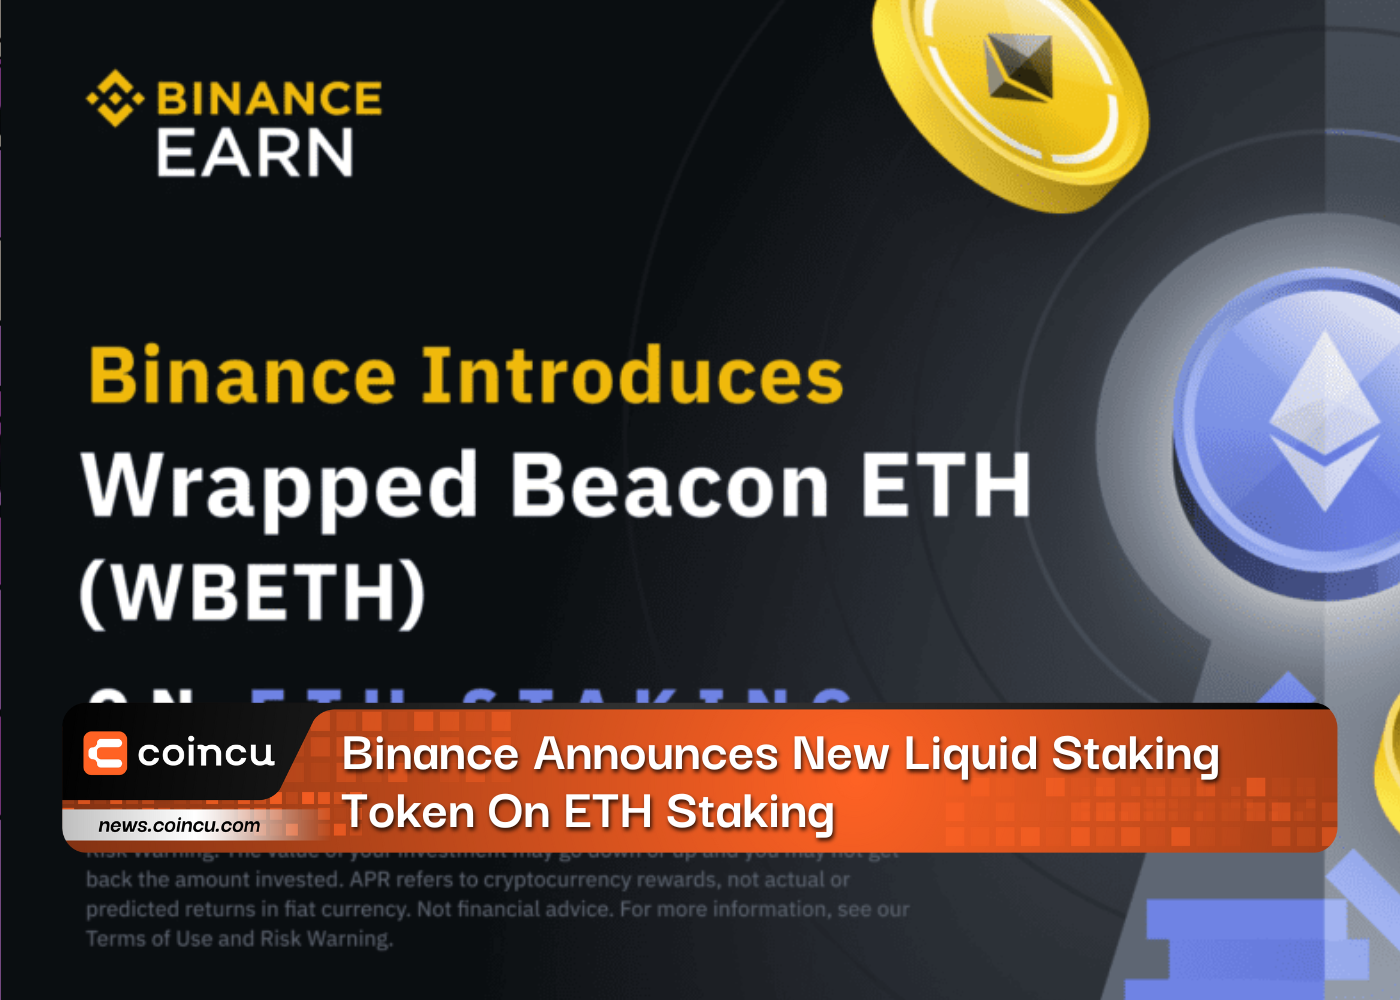 Binance Announces New Liquid Staking Token On ETH Staking